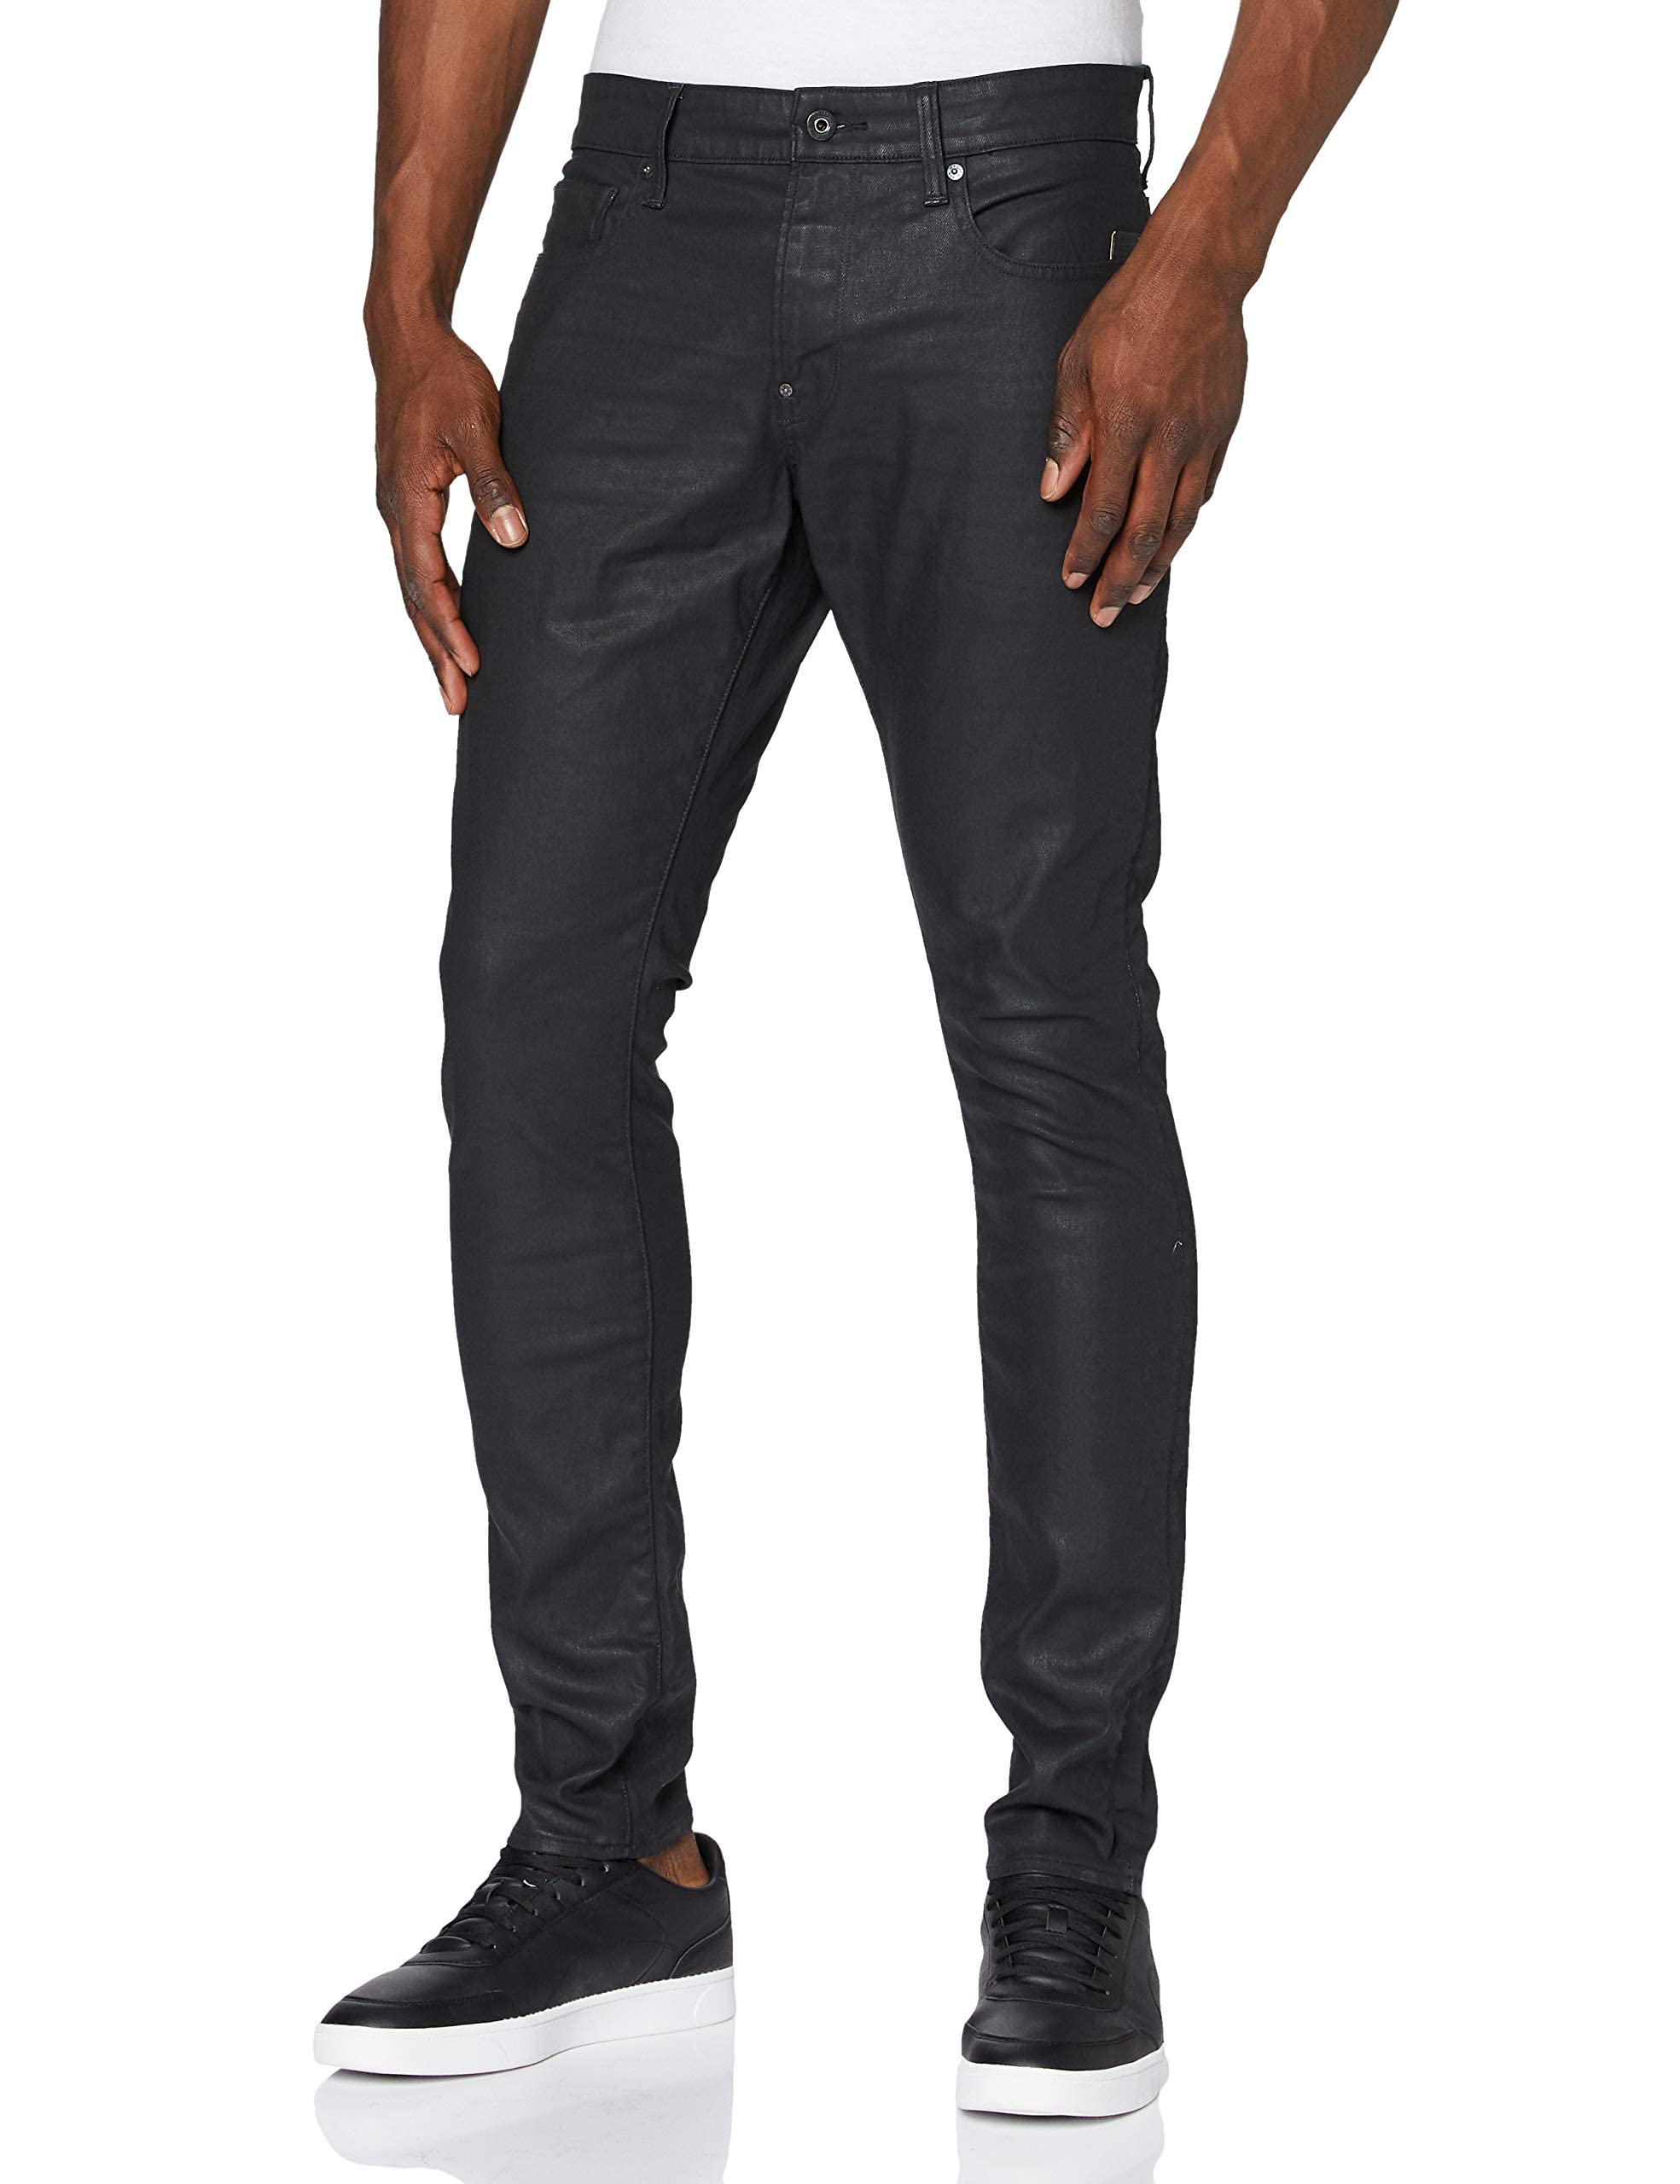 G-STAR RAW Herren Revend Skinny Jeans, Blau (3d dark aged 51010-7101-2967), 32W / 34L